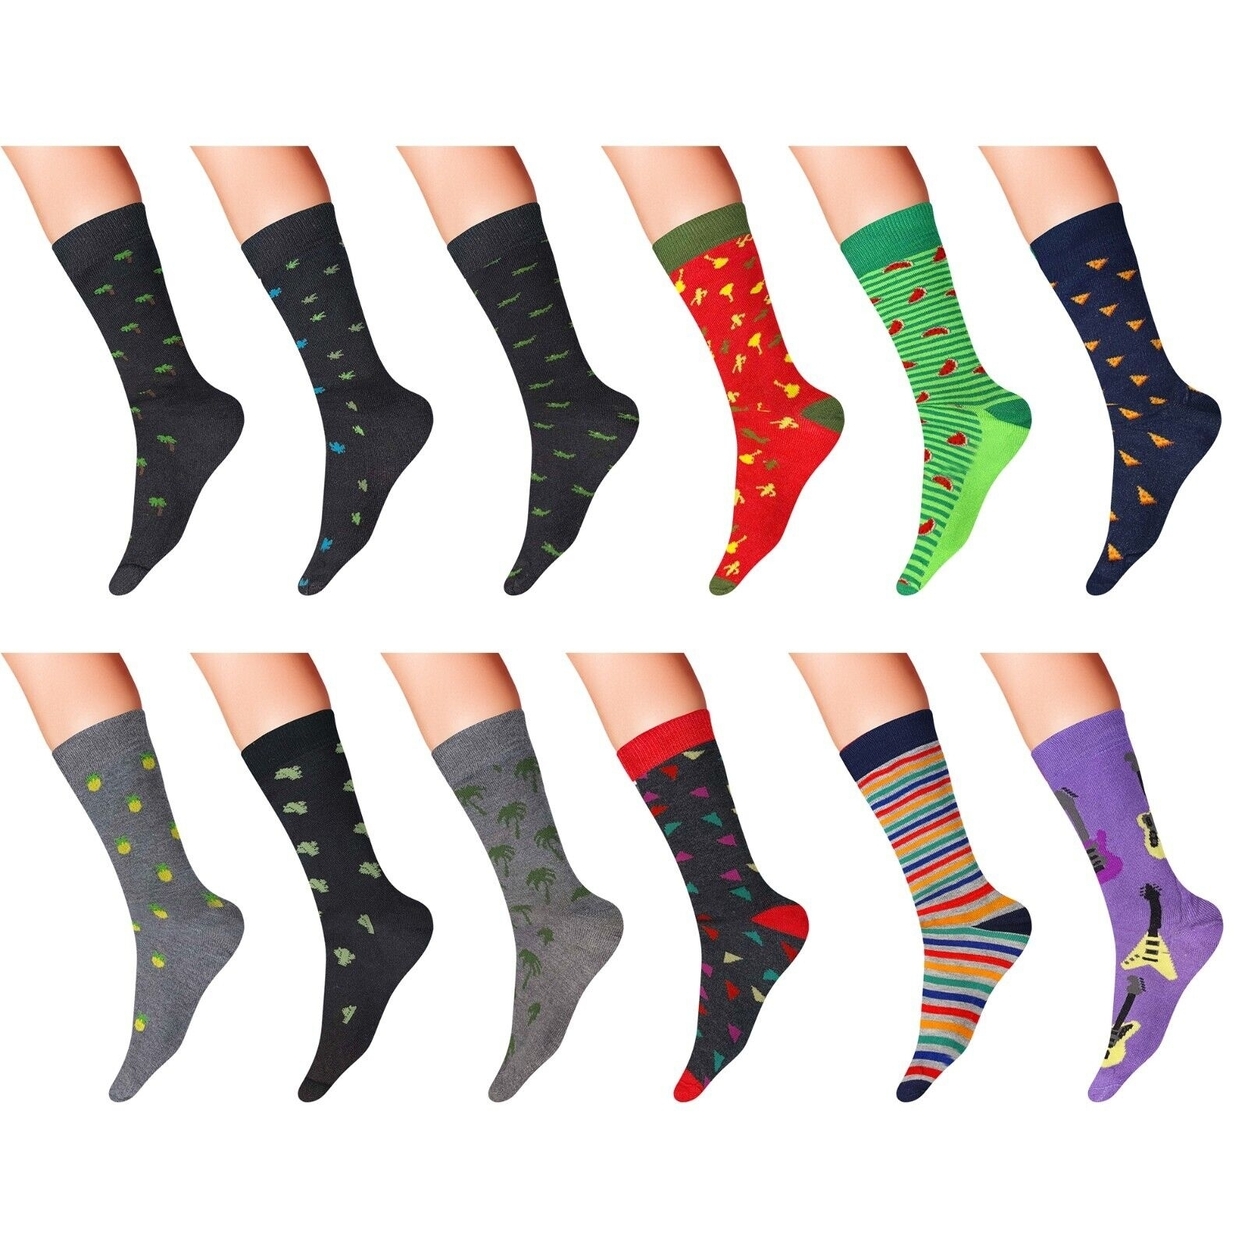 24-Pairs: Men's James Fiallo Premium Quality Fun Printed Dress Socks - Fun Pattern